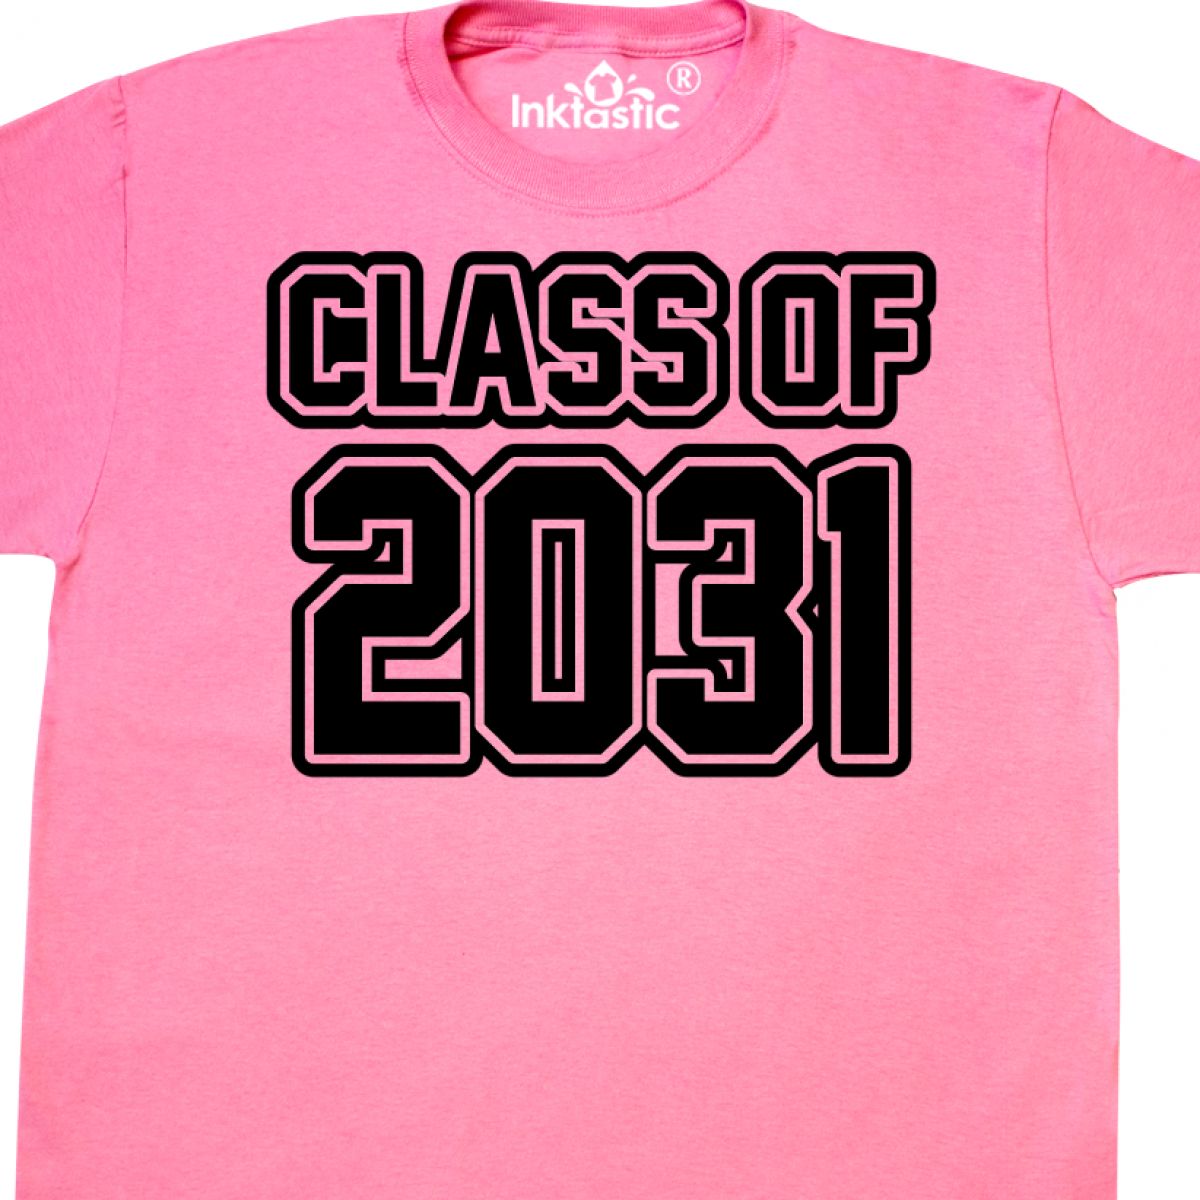 Inktastic Class Of 2031 T-Shirt Graduate Graduation Mens Adult Clothing ...